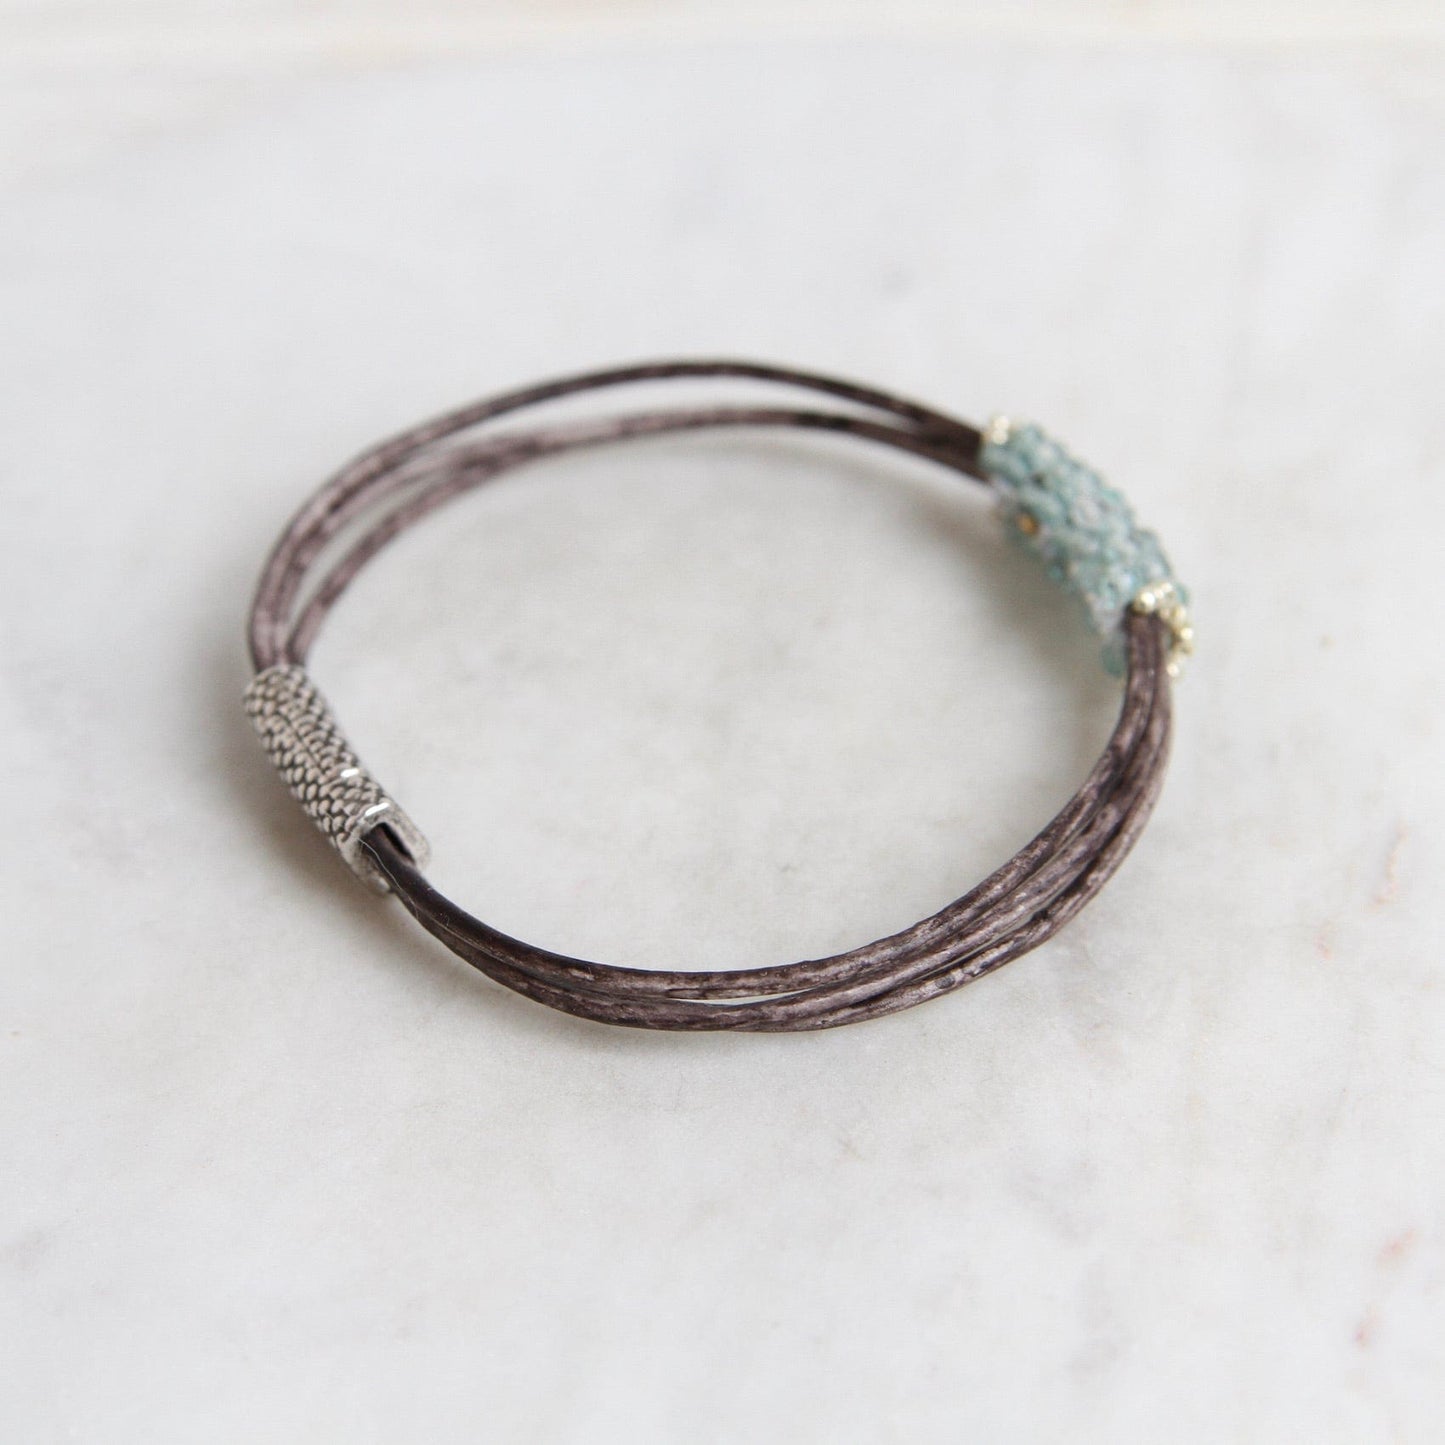 BRC-JM Hand Stitched Tiny Aquamarine with Japanese Seed Bead Picot Edge Bracelet